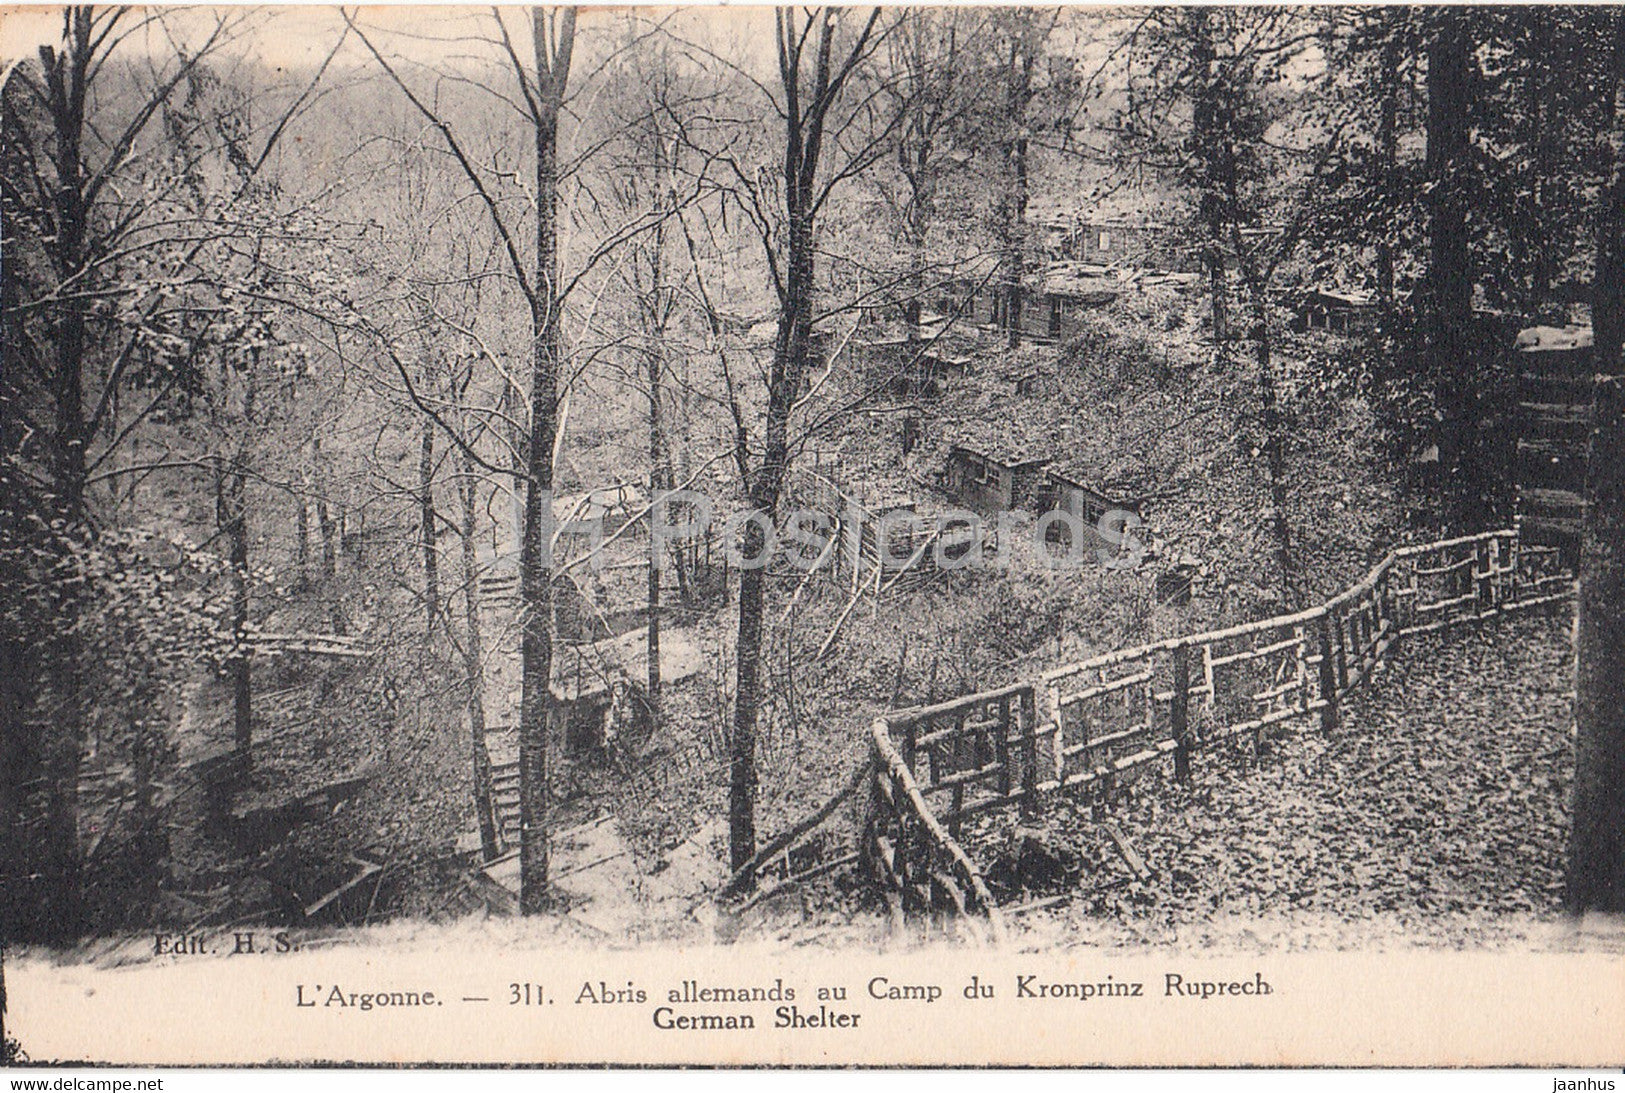 L'Argonne - Abris allemands au Camp du Kronprinz Ruprech - German Shelter - 311 - WWI - old postcard - France - unused - JH Postcards